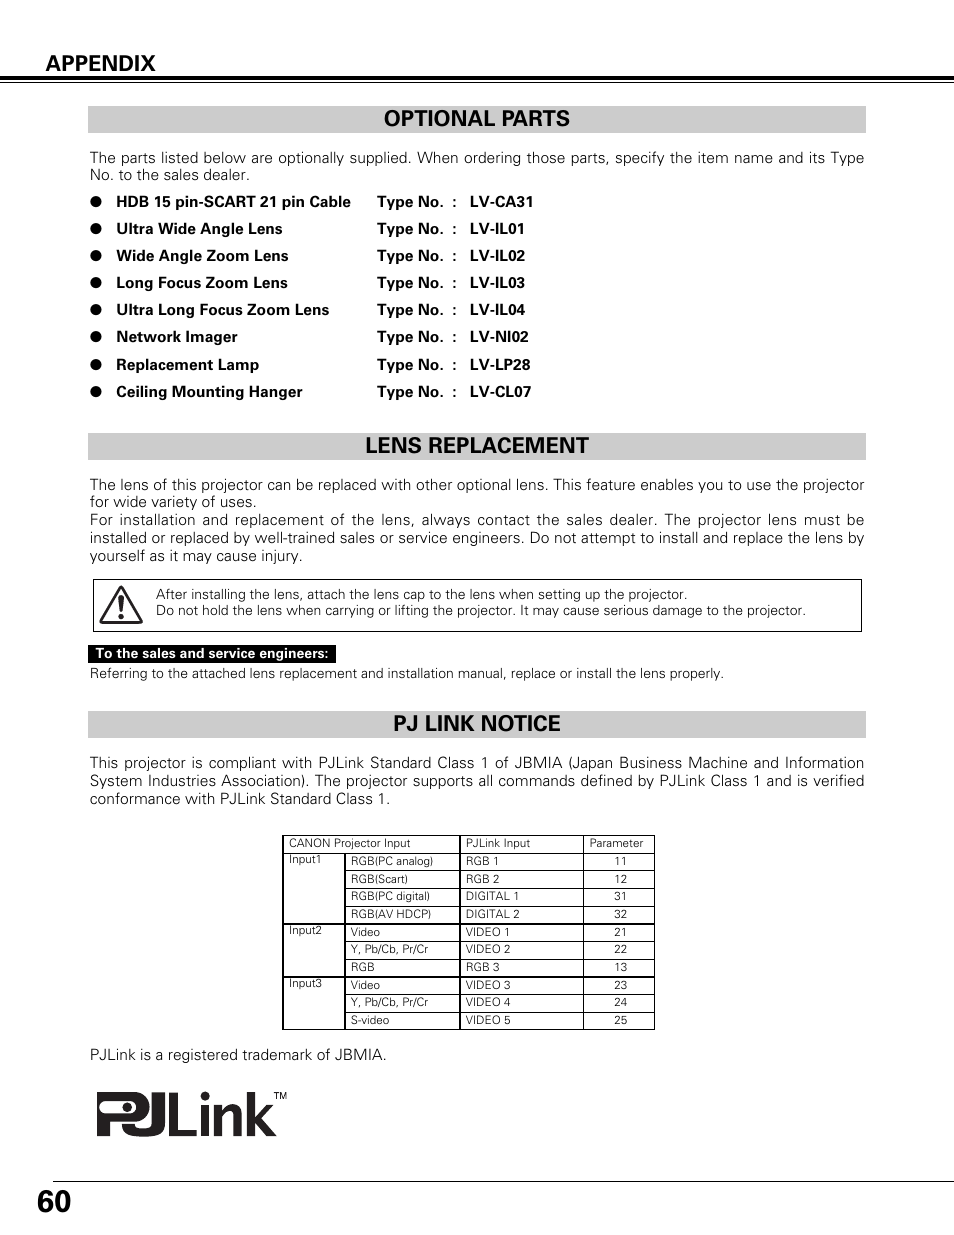 Optional parts, Lens replacement, Pj link notice | Appendix optional parts | Canon LV-7575 User Manual | Page 60 / 63